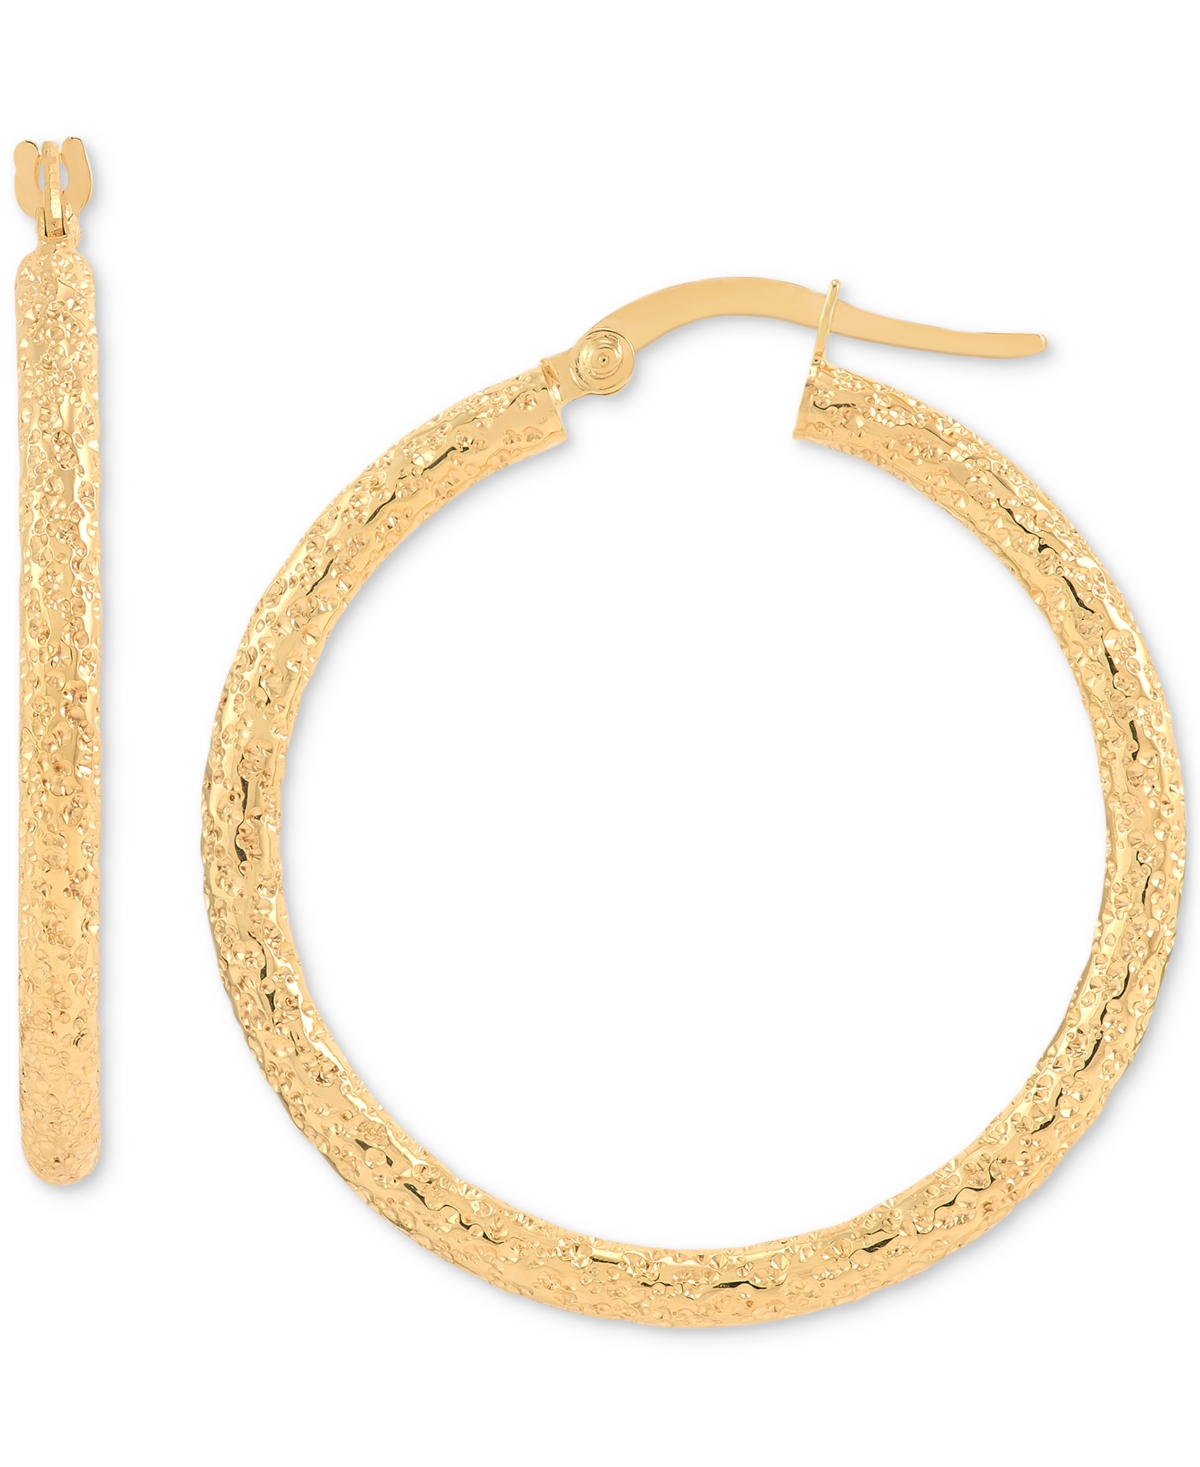 Textured Tube Medium Hoop Earrings in 10k Gold, 1-1/8" - Yellow Gold